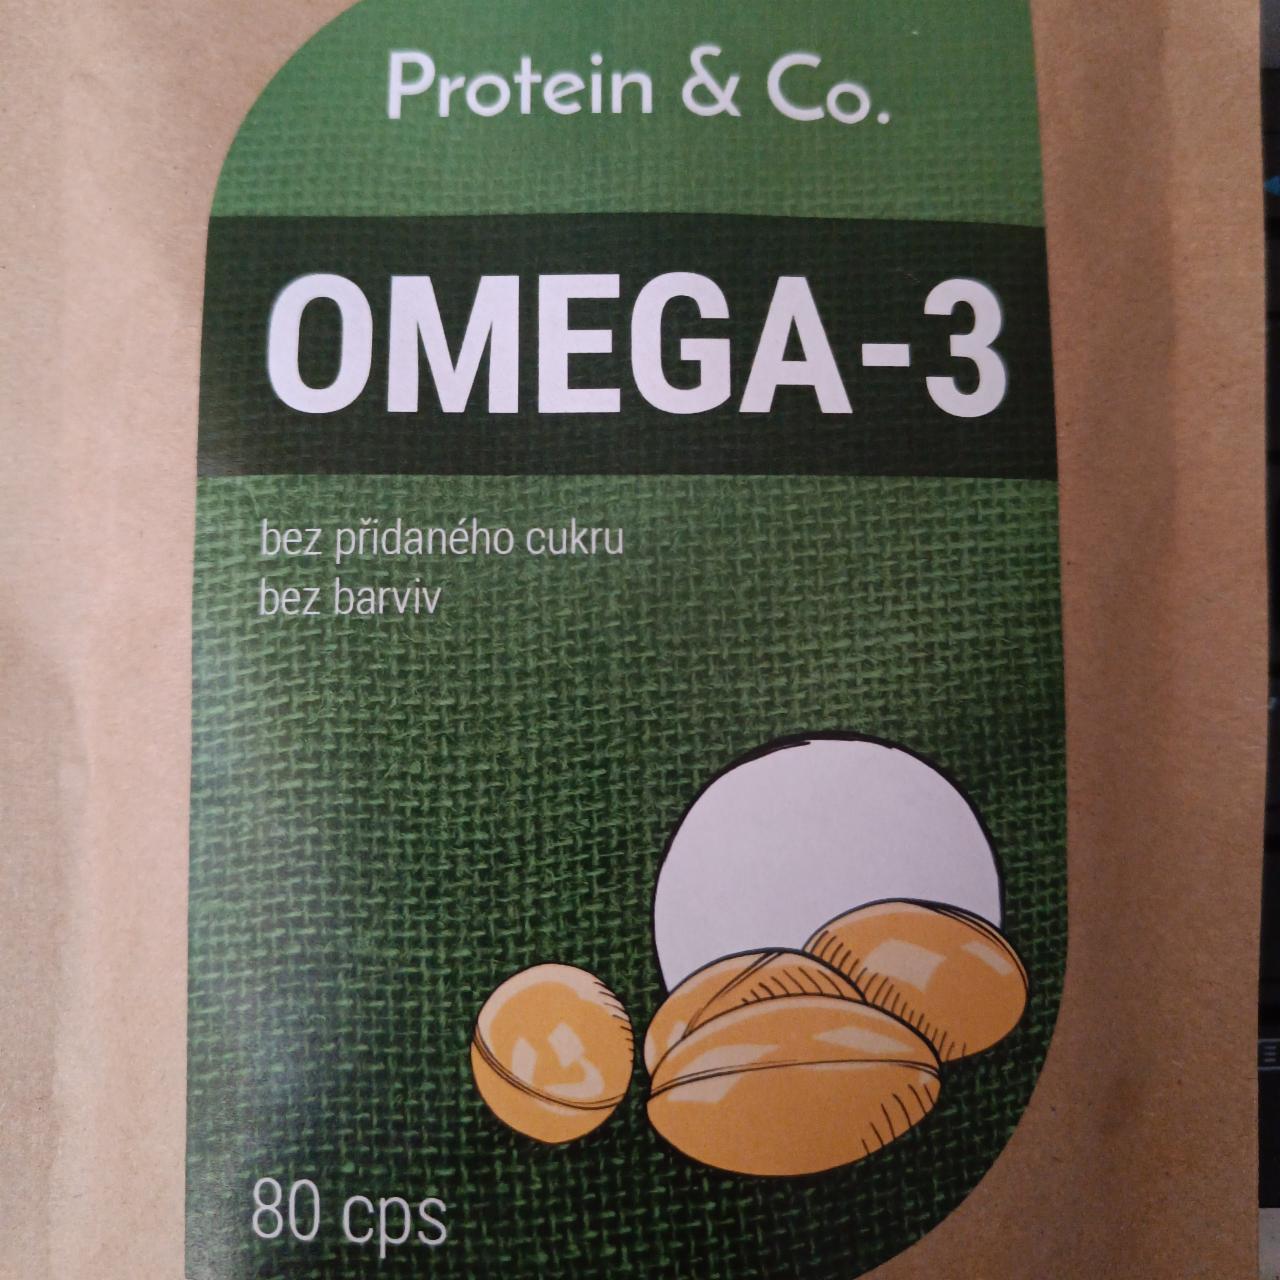 Fotografie - Omega-3 Protein & Co.